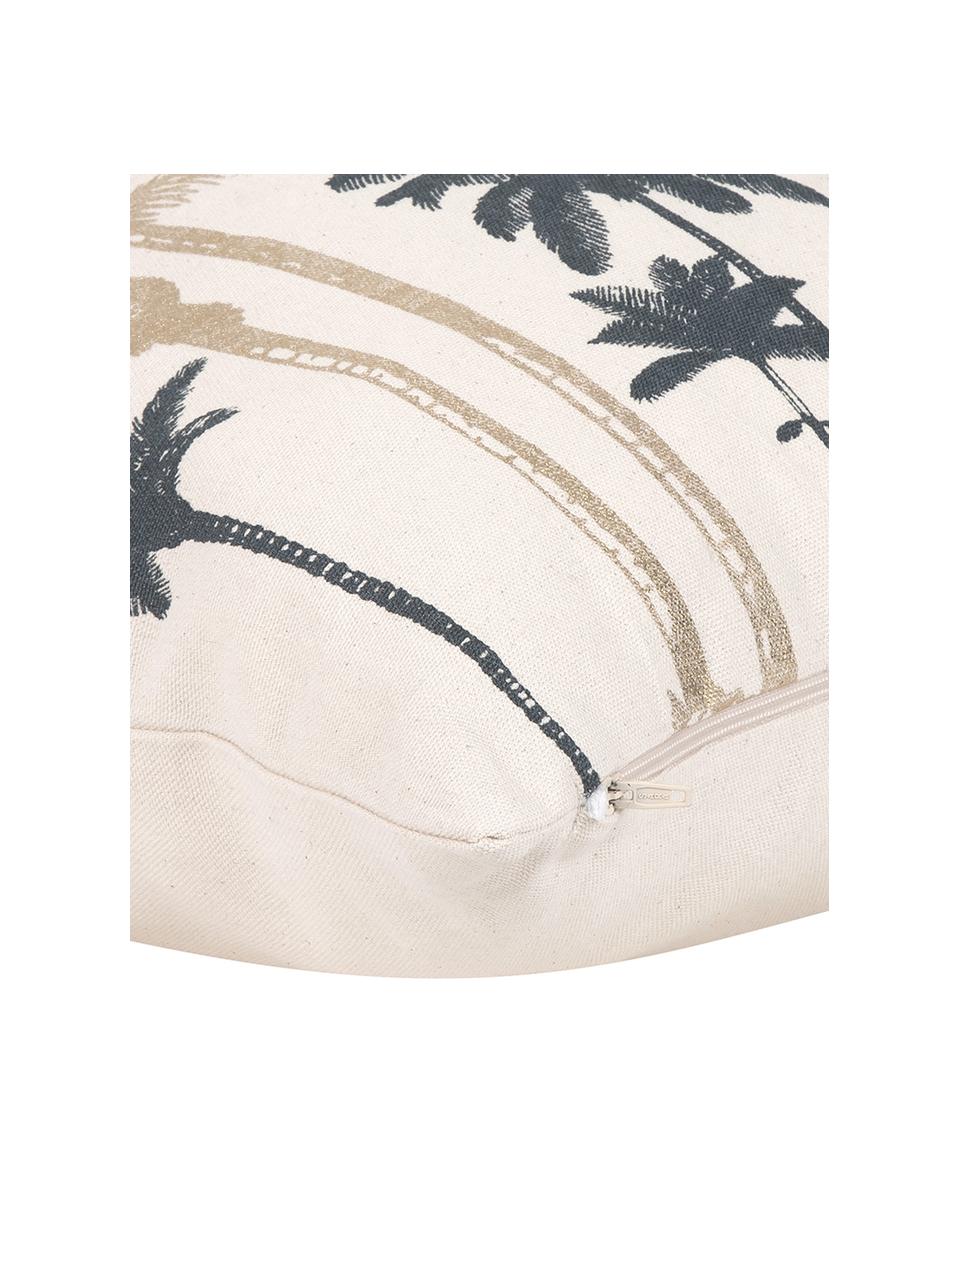 Kissenhülle Palmas mit Palmenprint, 100% Baumwolle, Ecru, Goldfarben, Dunkelgrün, 45 x 45 cm